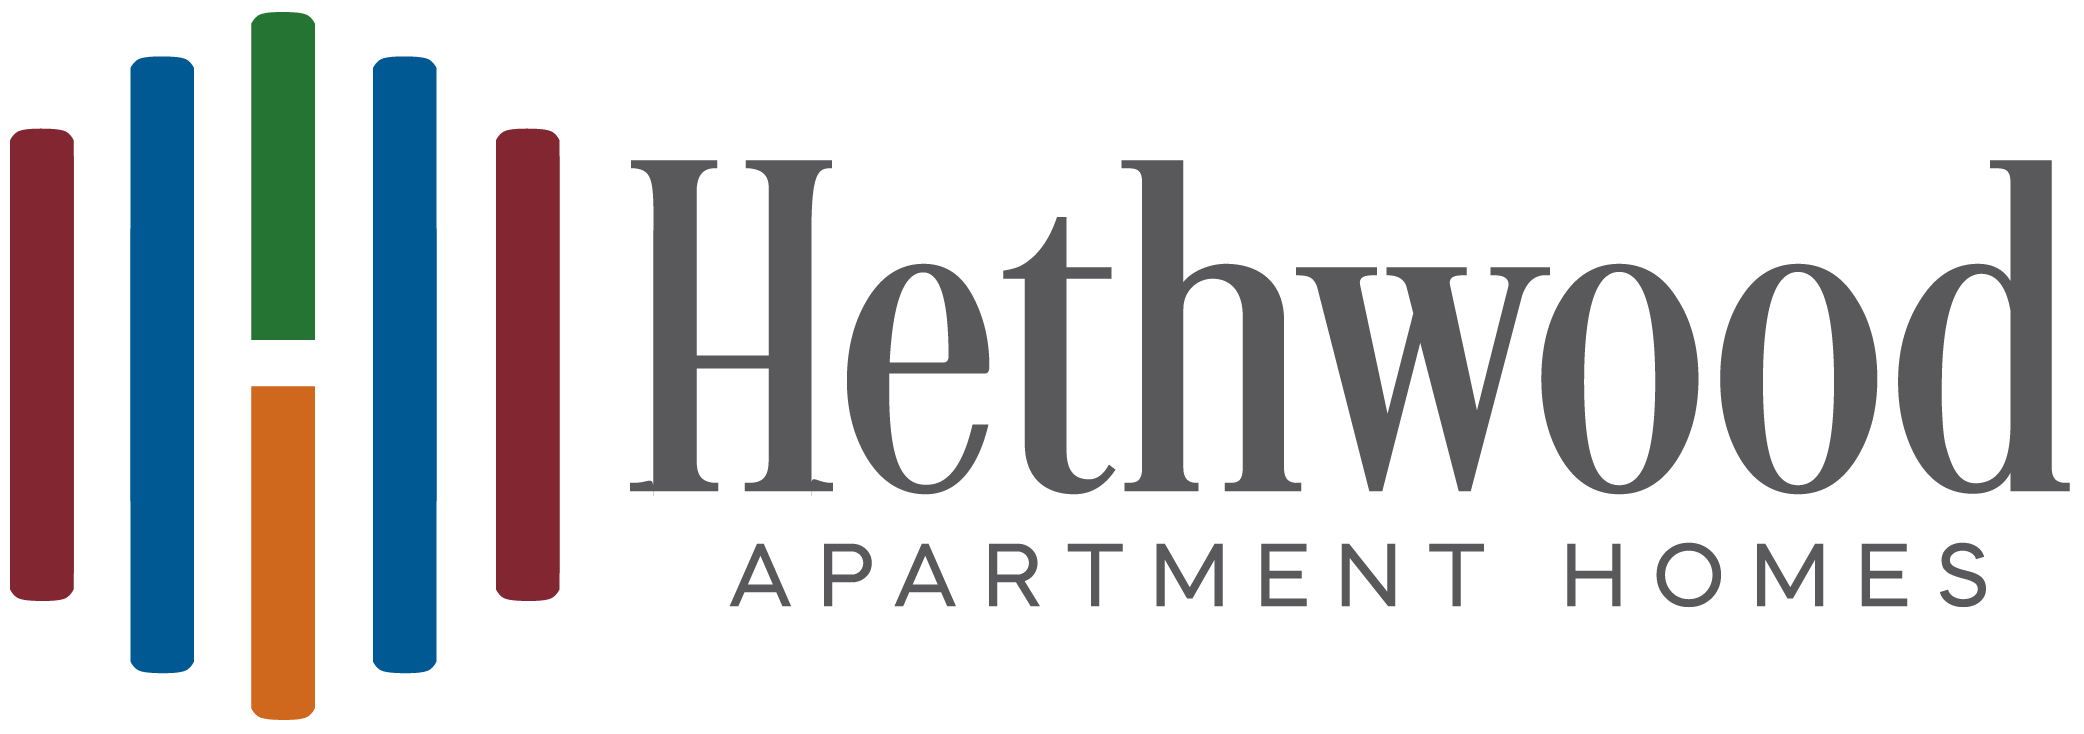 Hethwood Apartment Homes logo